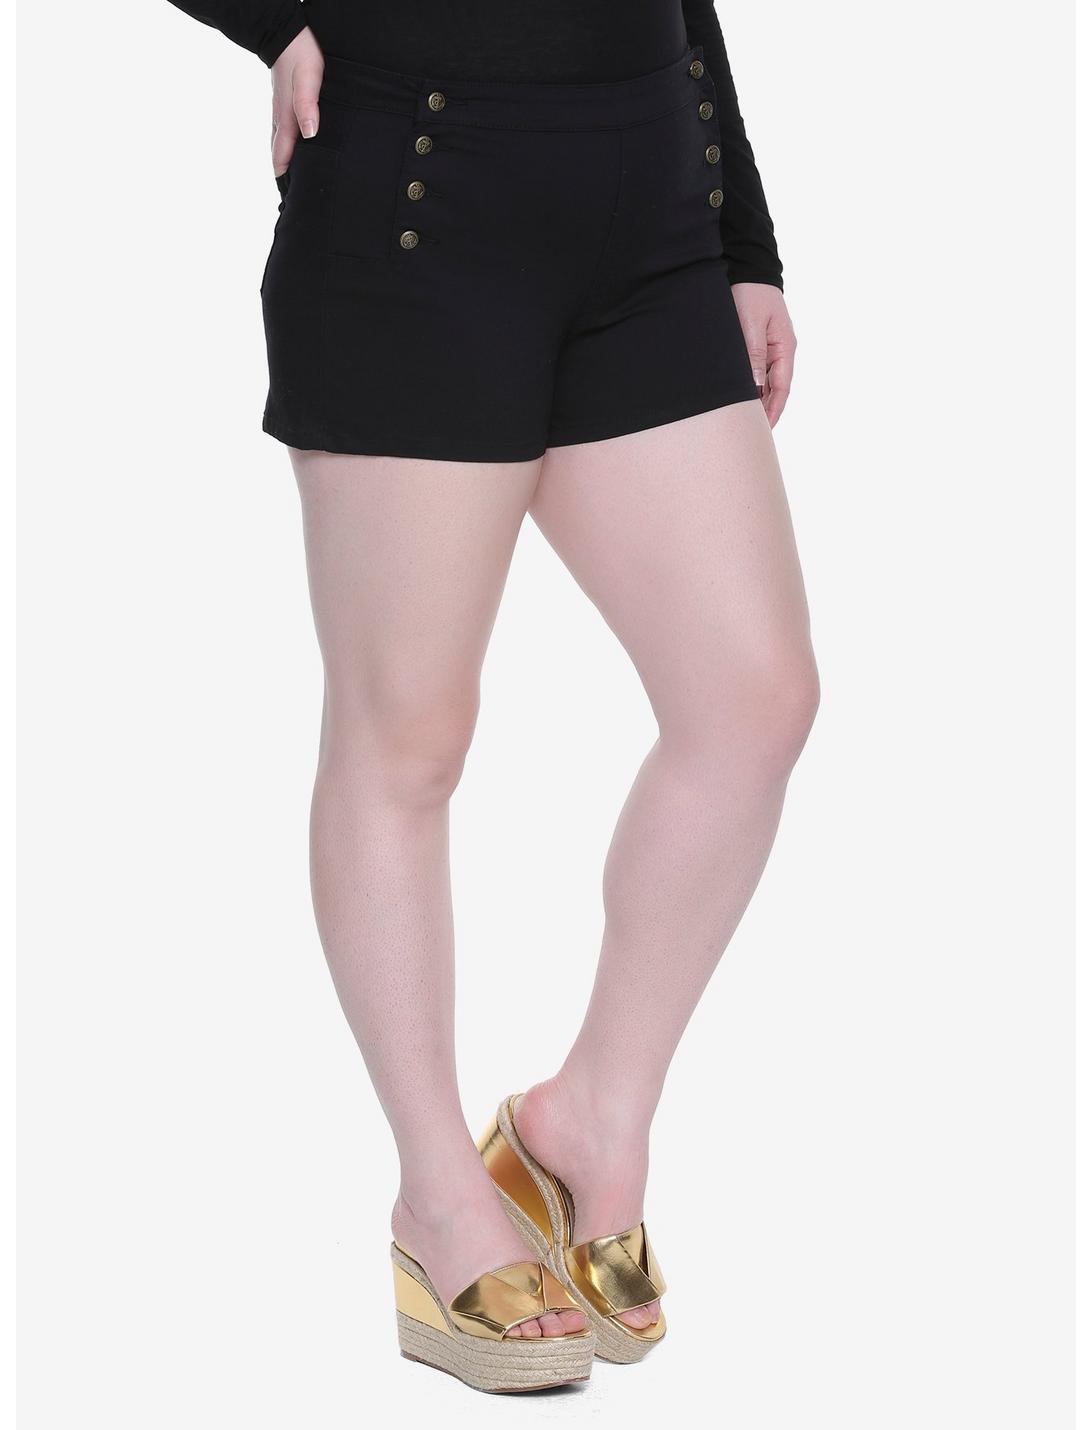 Blackheart Black High-Waisted Sailor Shorts Plus Size, BLACK, hi-res